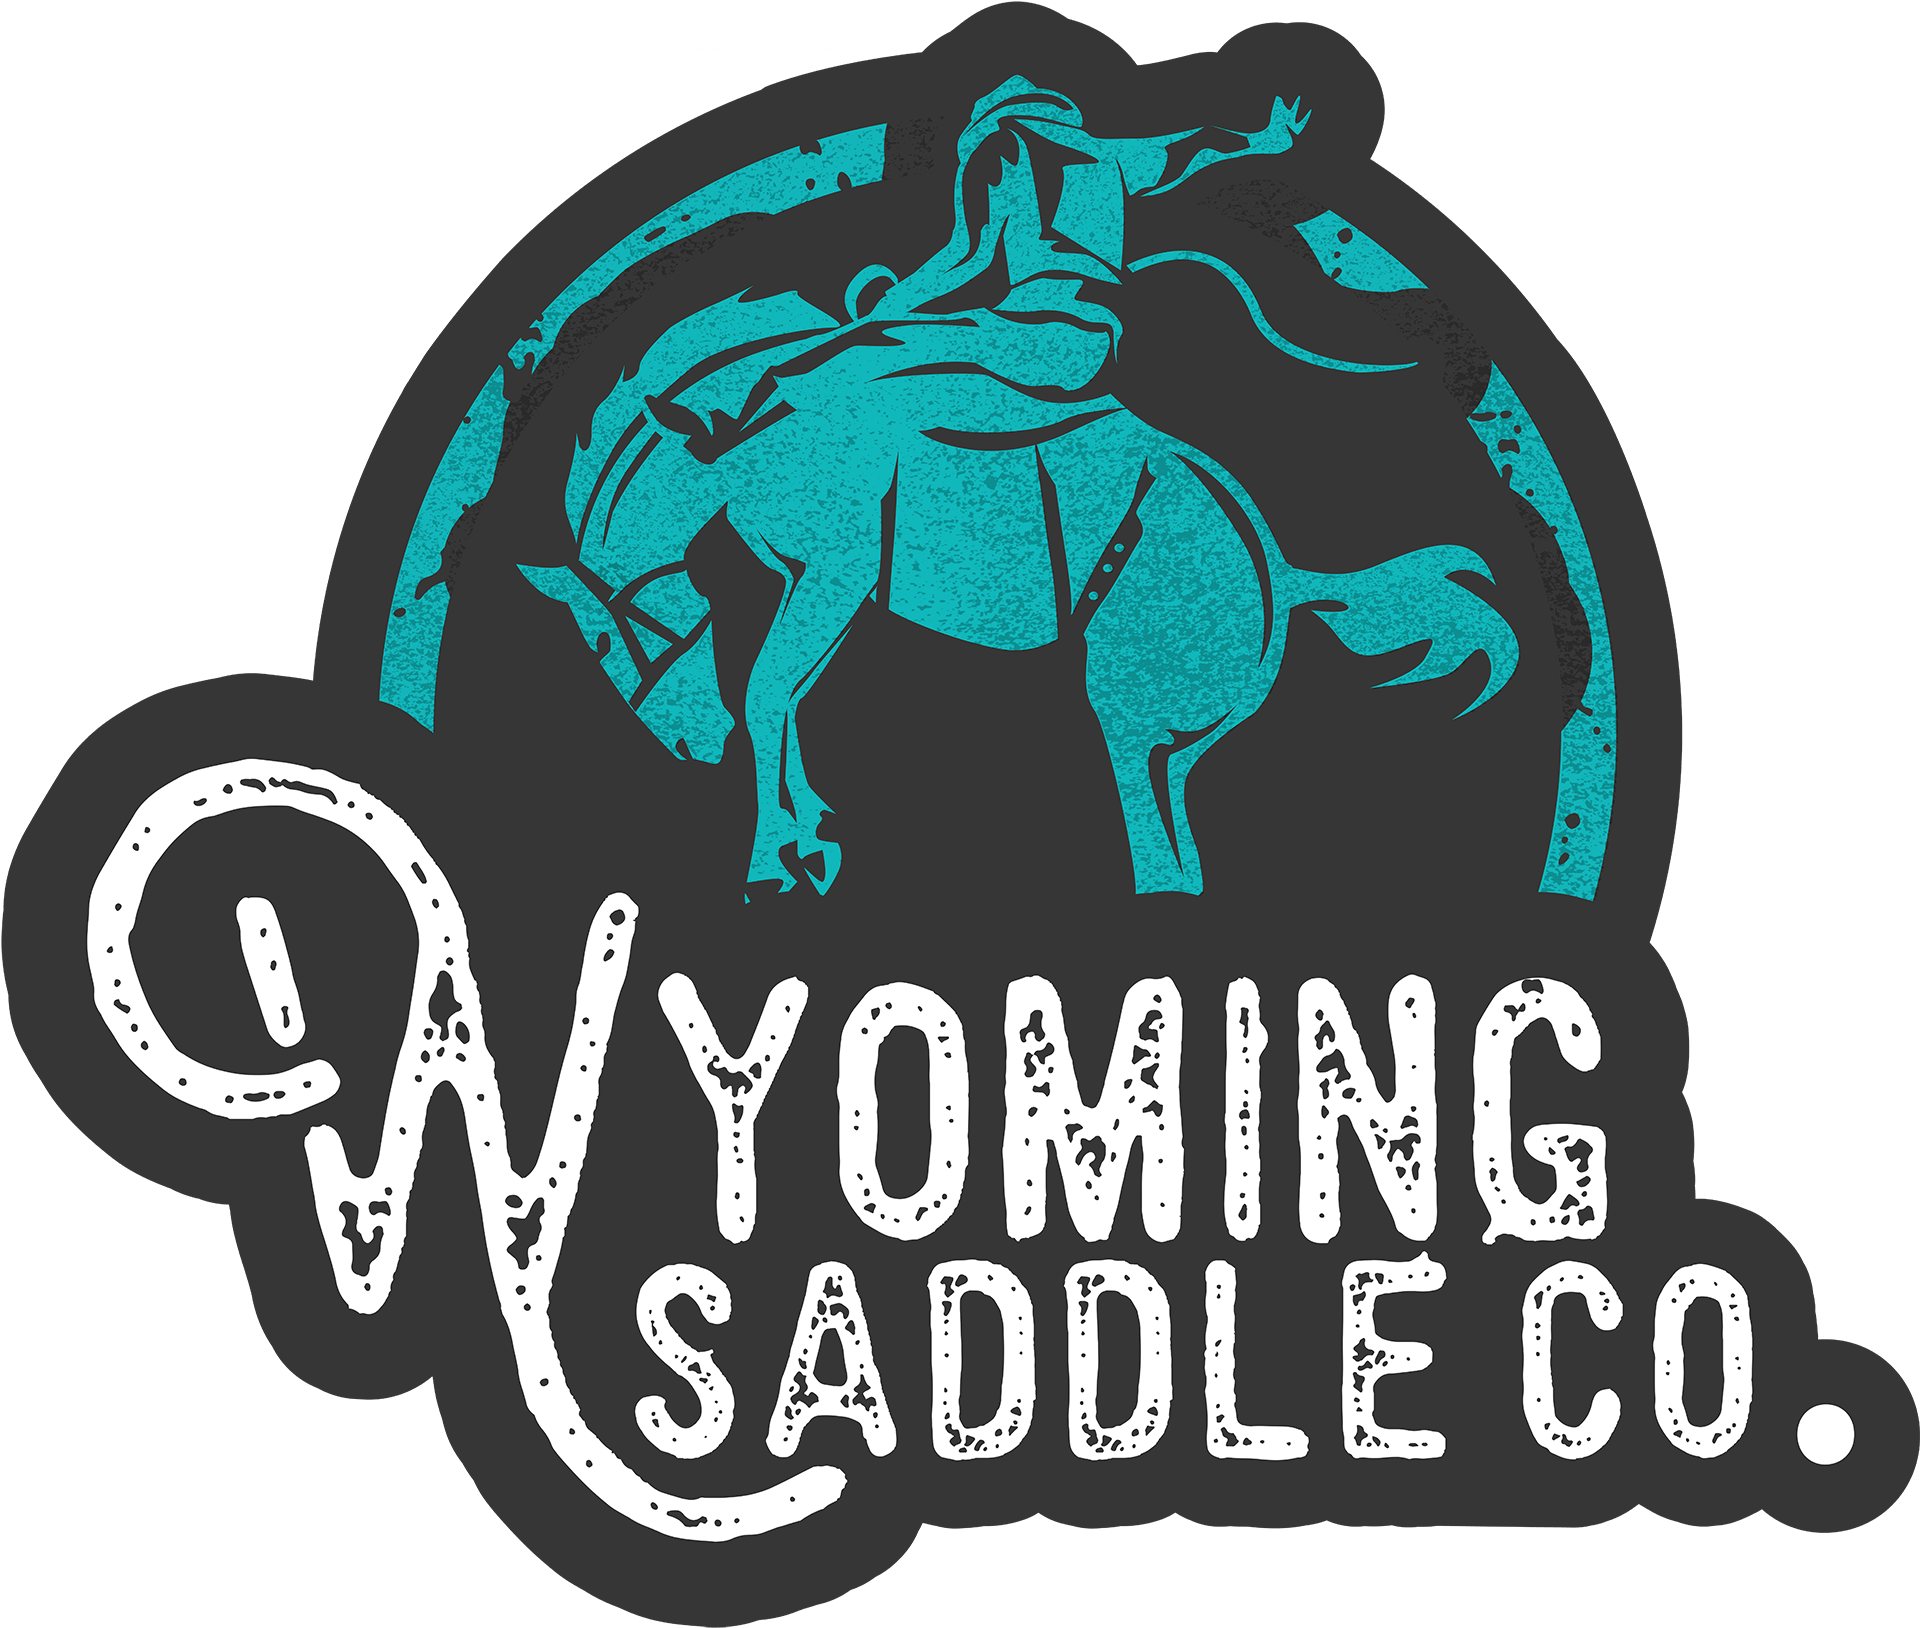 (c) Wyomingsaddlecompany.com